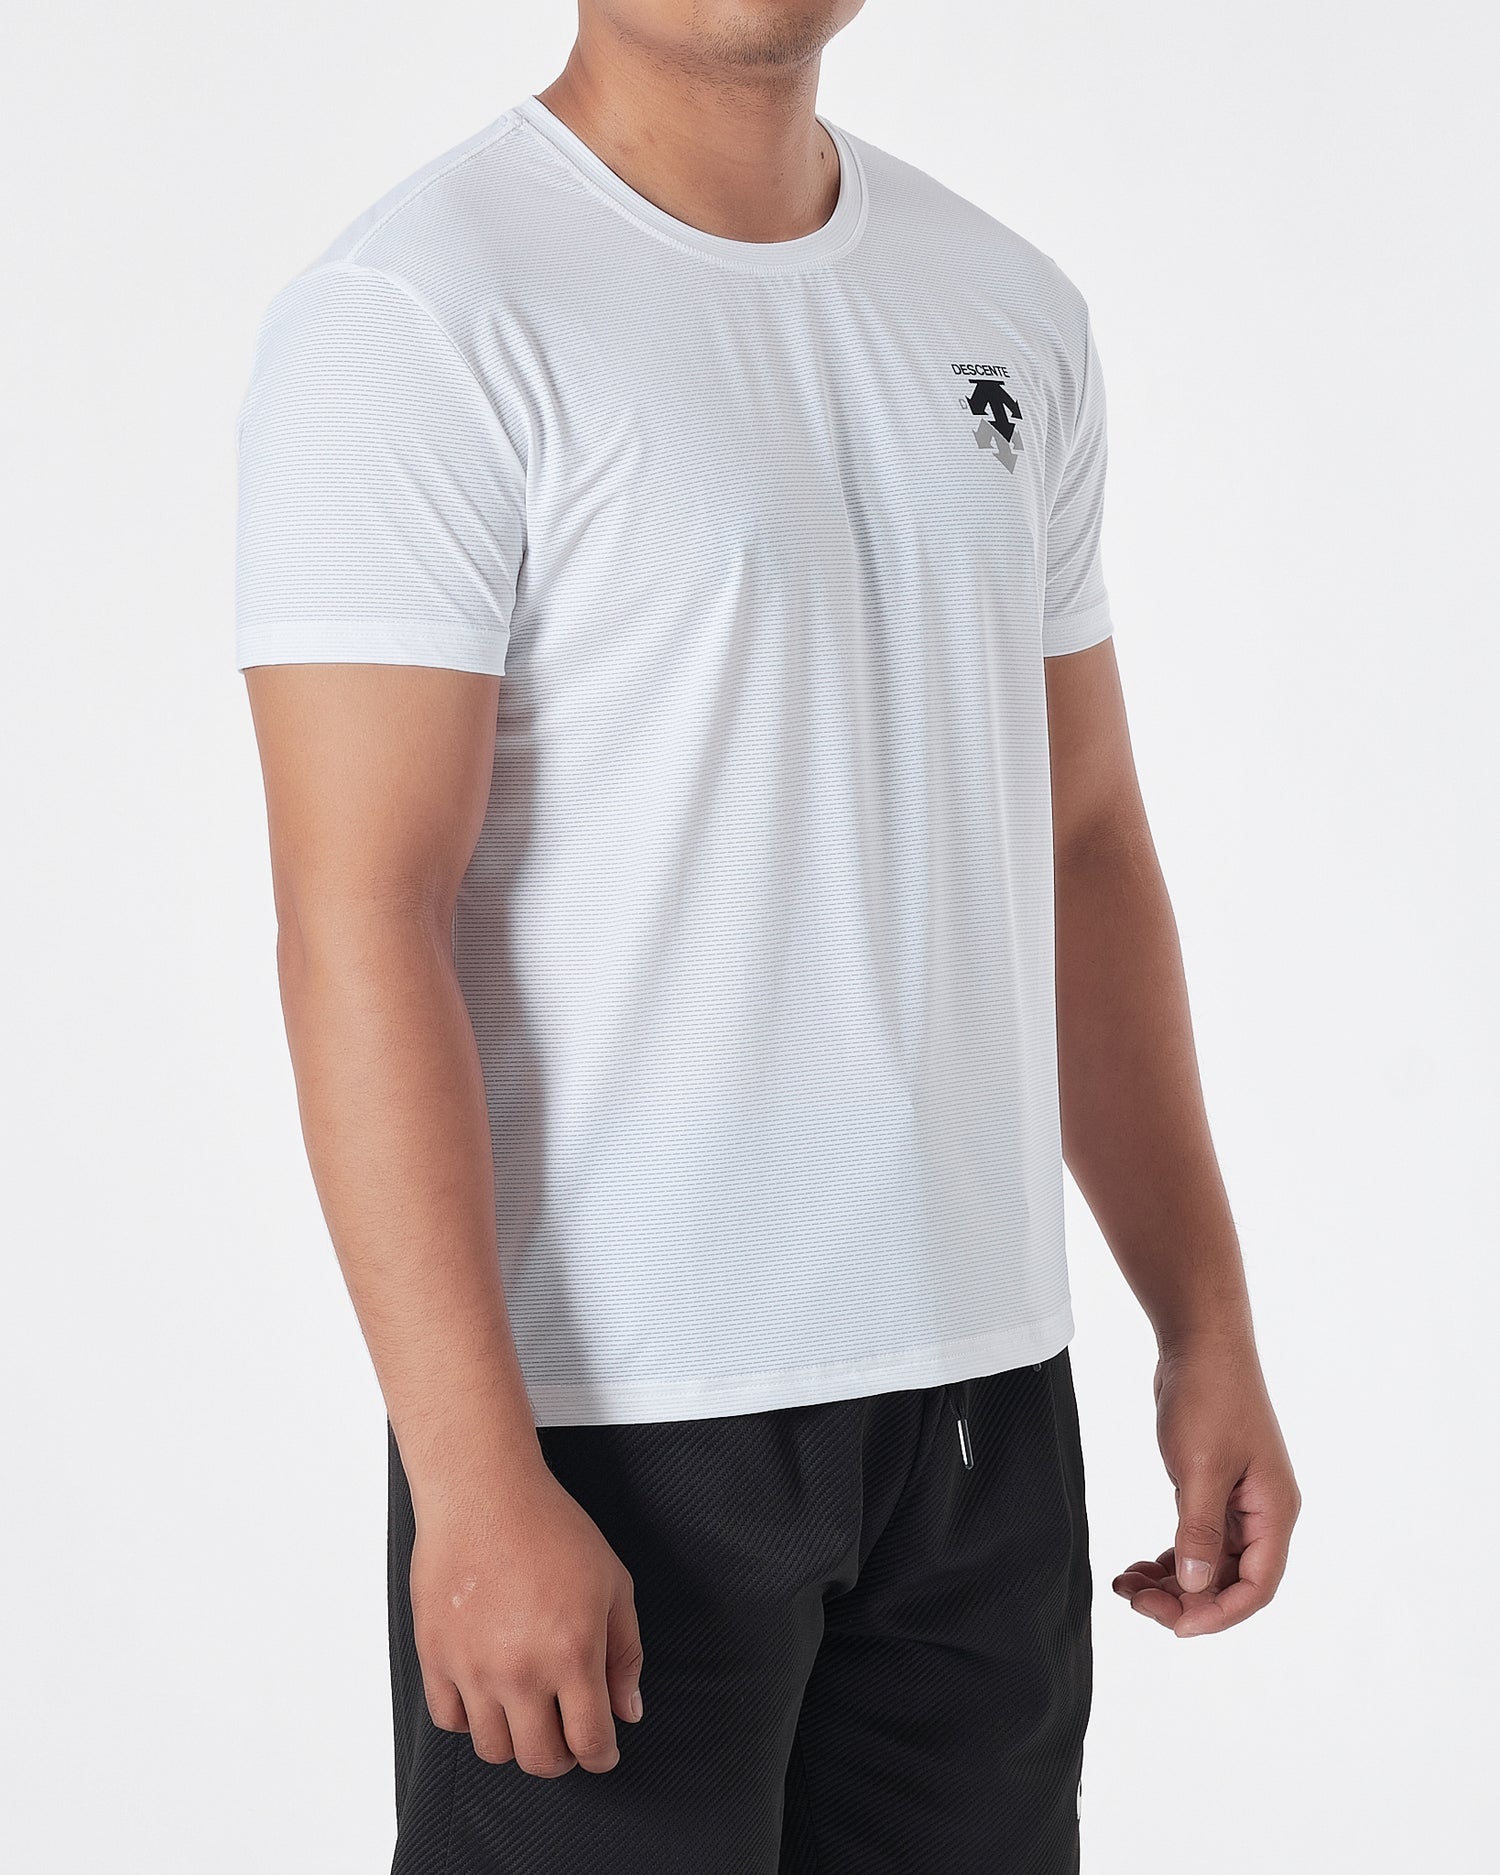 DES Logo Printed Men White Sport T-Shirt 13.50